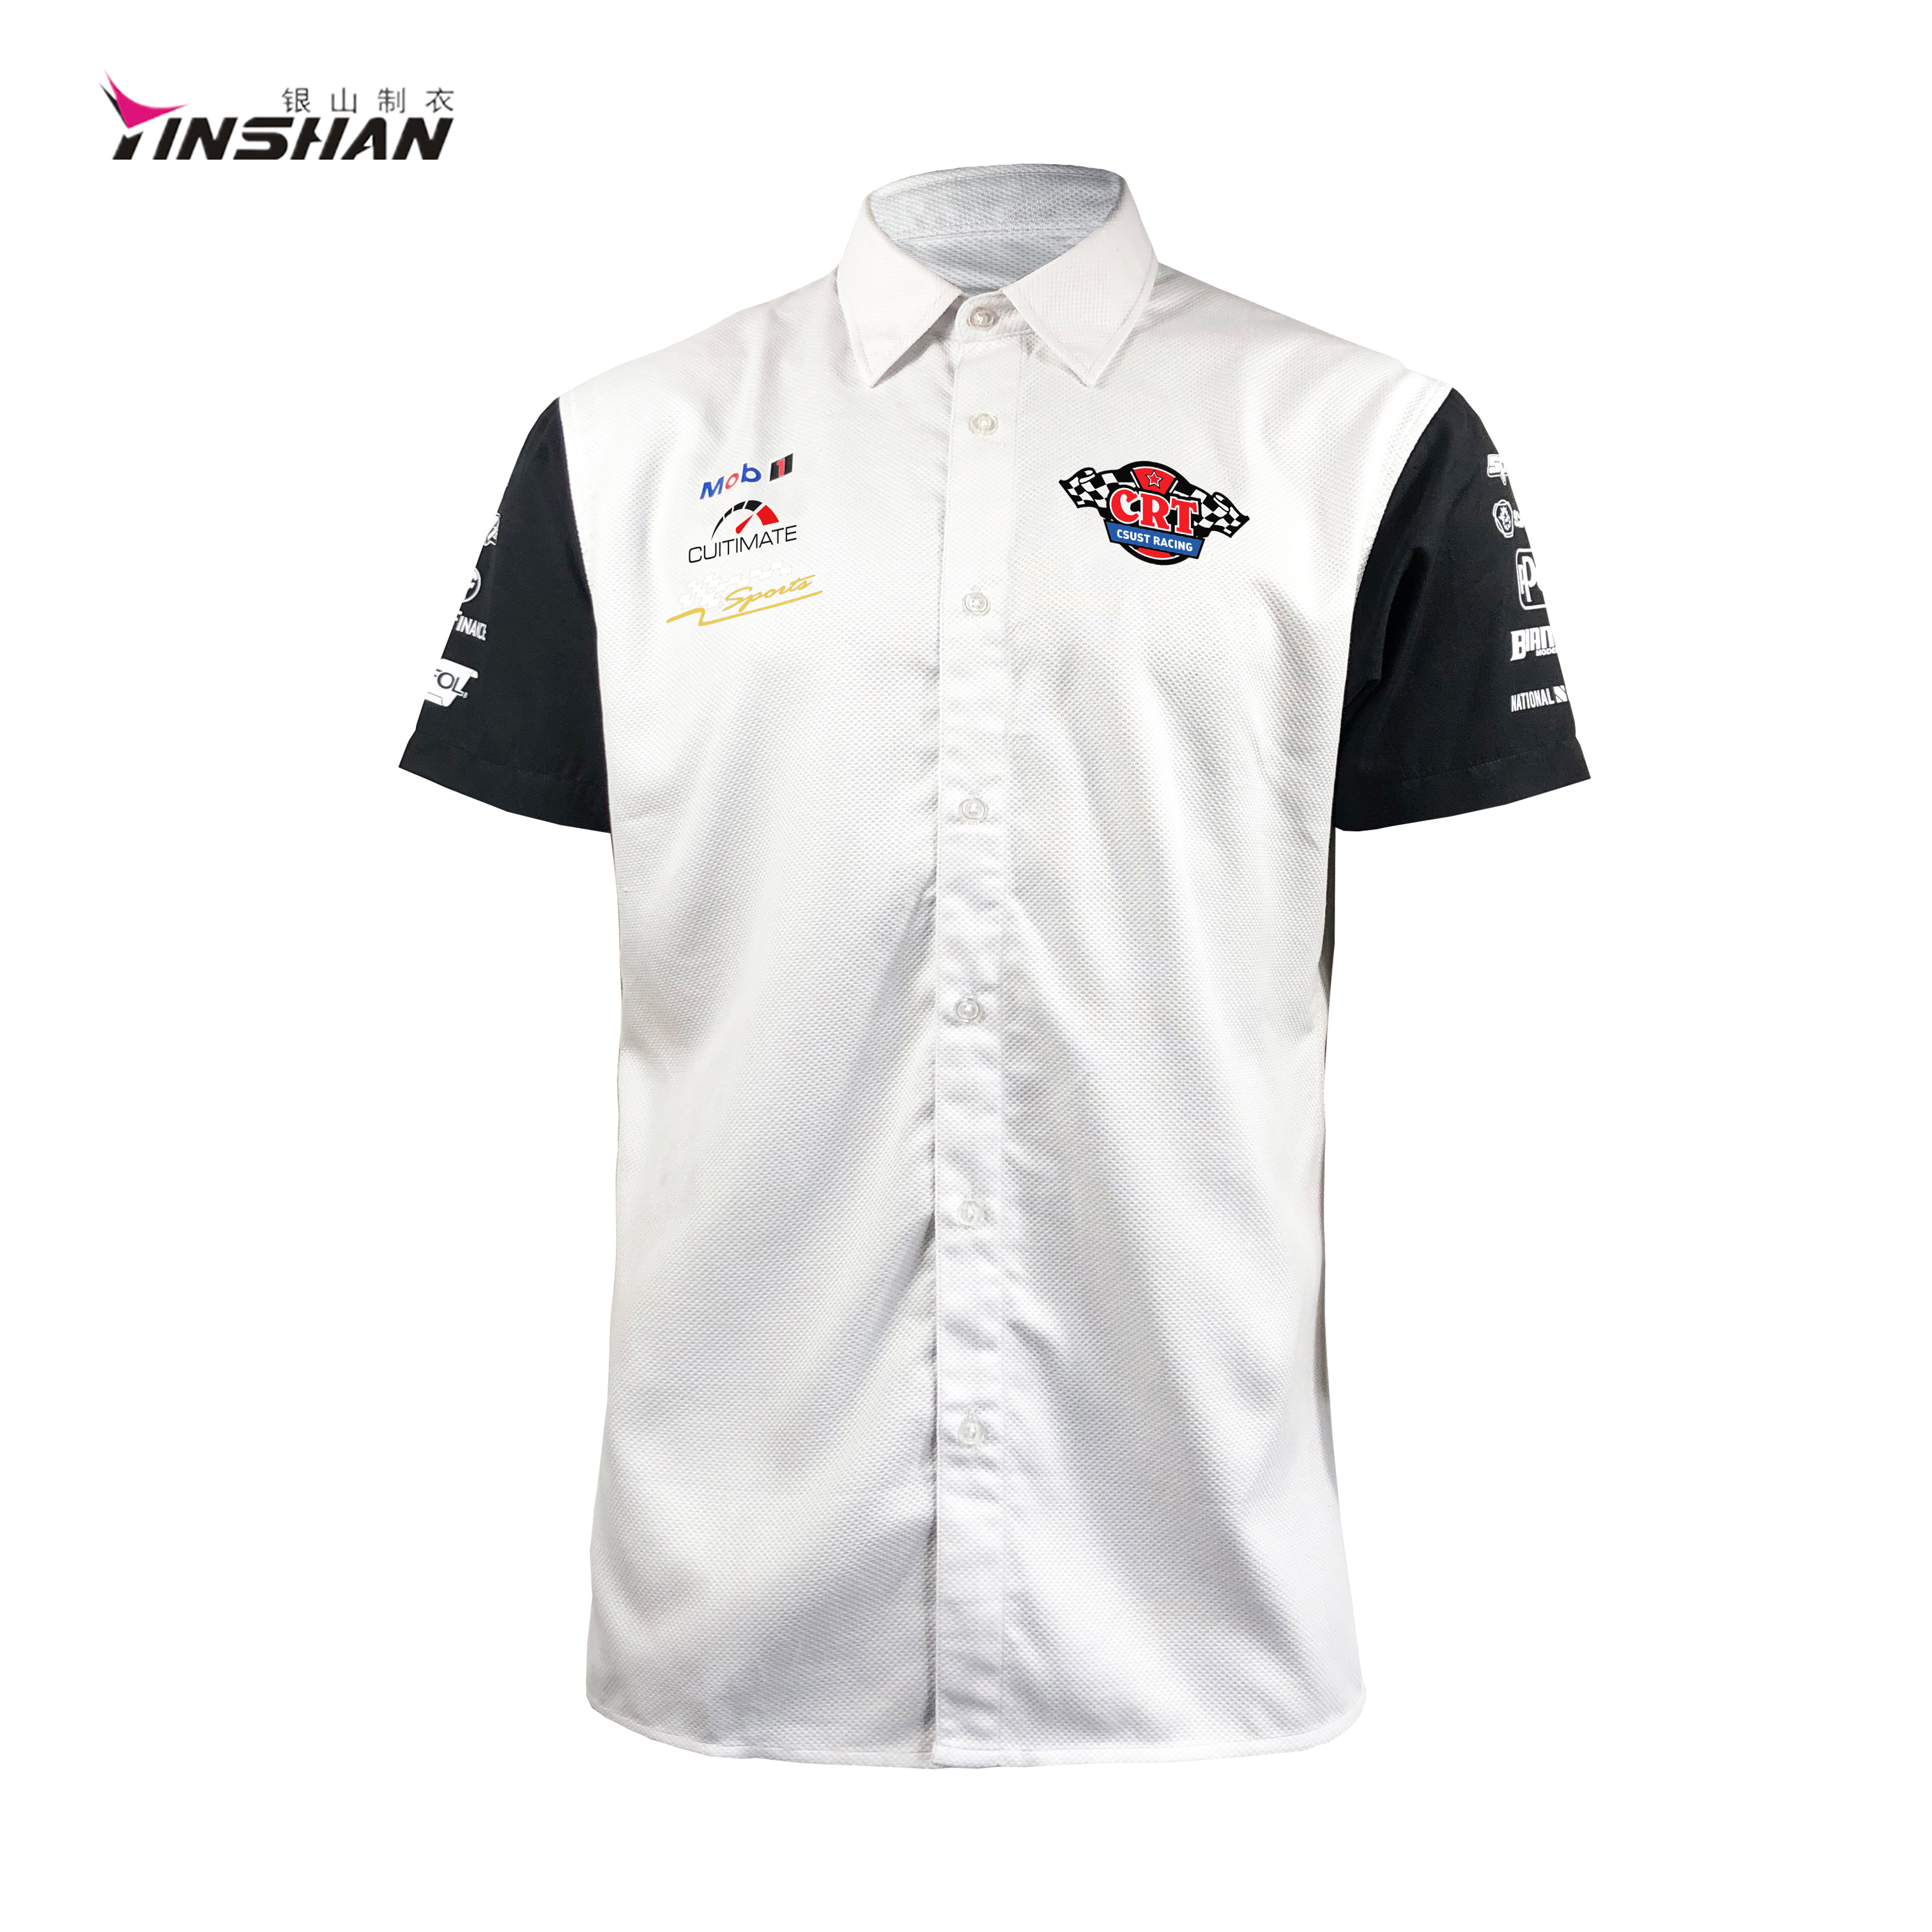 Customized Logo Design Cotton Sports Shirt with Artwork Printing